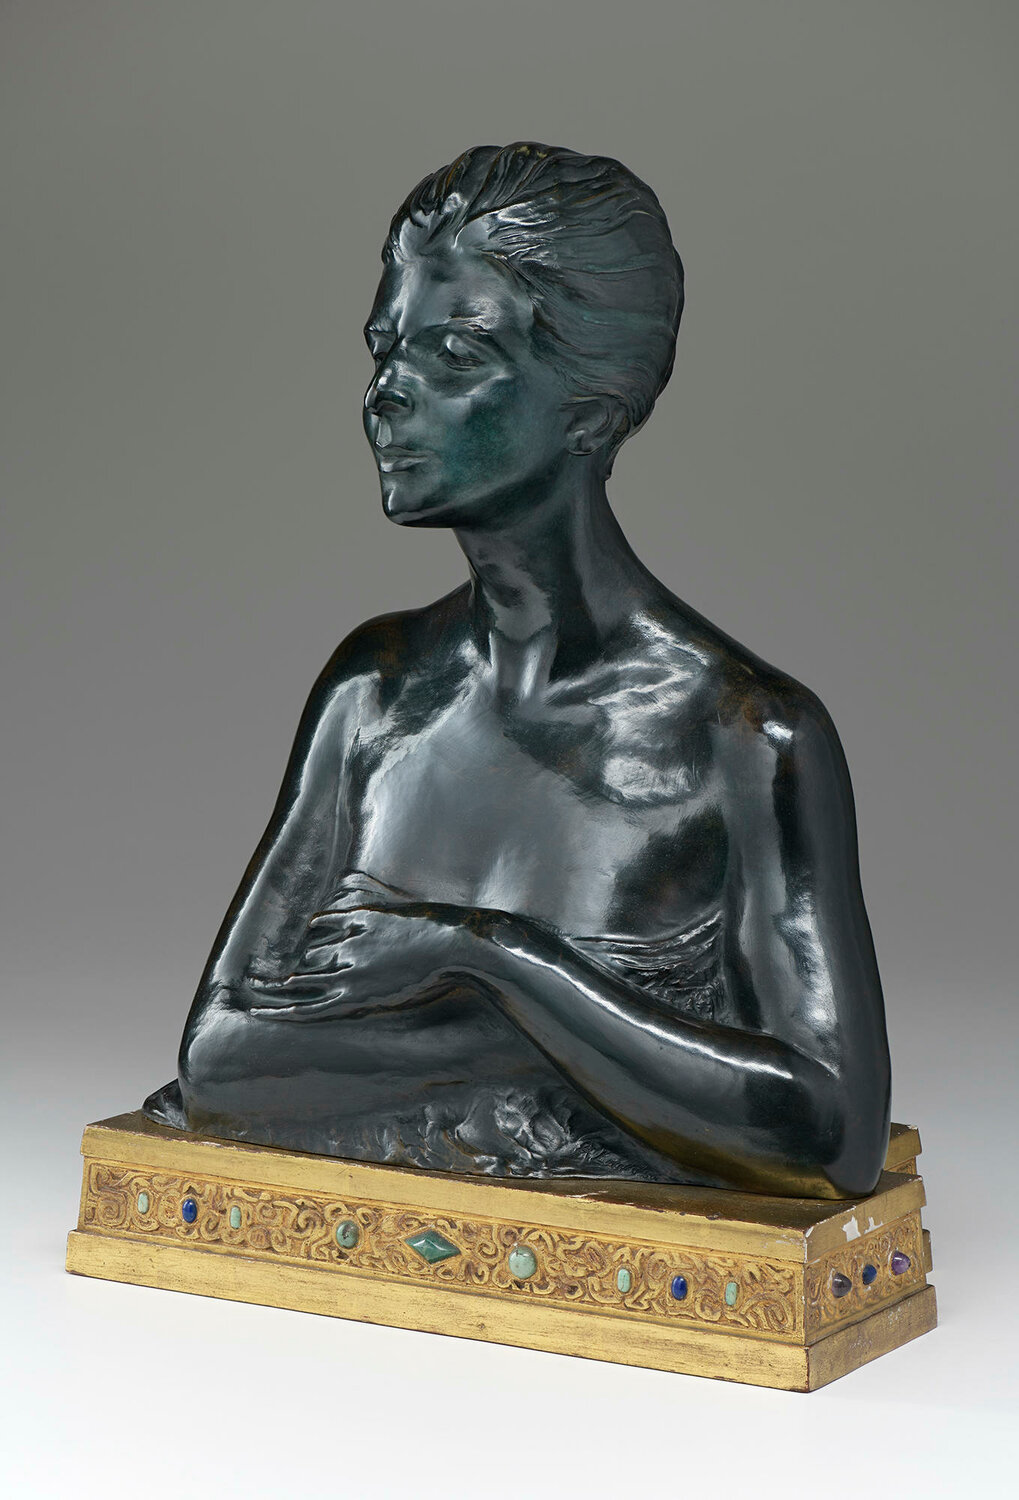 Anna Coleman Ladd’s bronze bust of Maria de Acosta Sargent purchased in 1915 by Isabella Stewart Gardner, can be seen today in Boston’s Isabella Stewart Gardner Museum’s Macknight room.